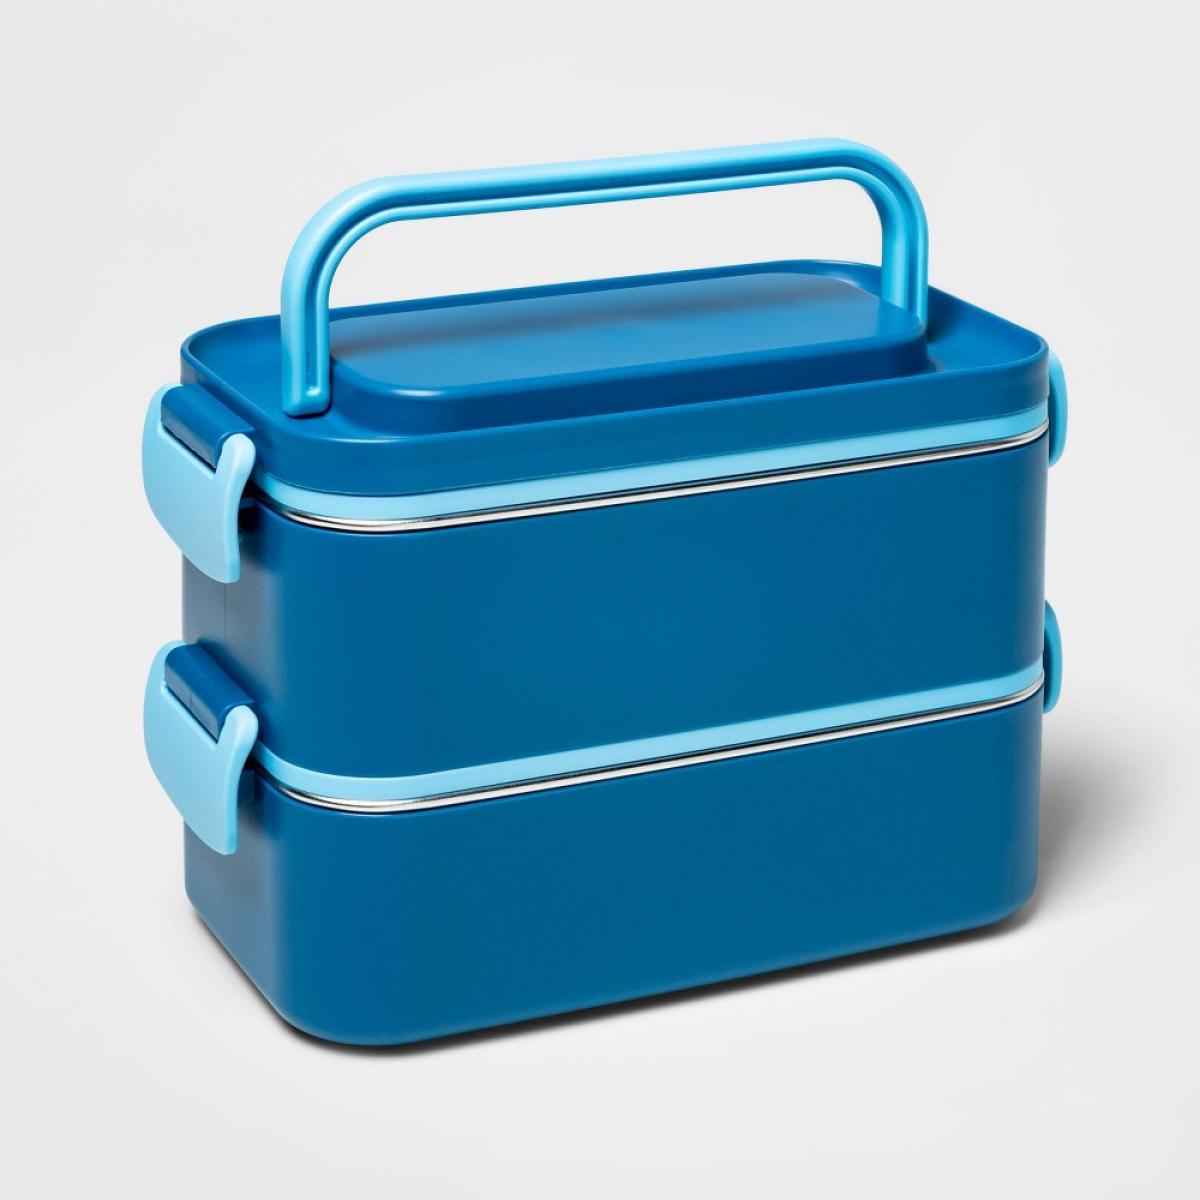 Stainless Steel Leakproof Bento Box - Santa Fe Blue